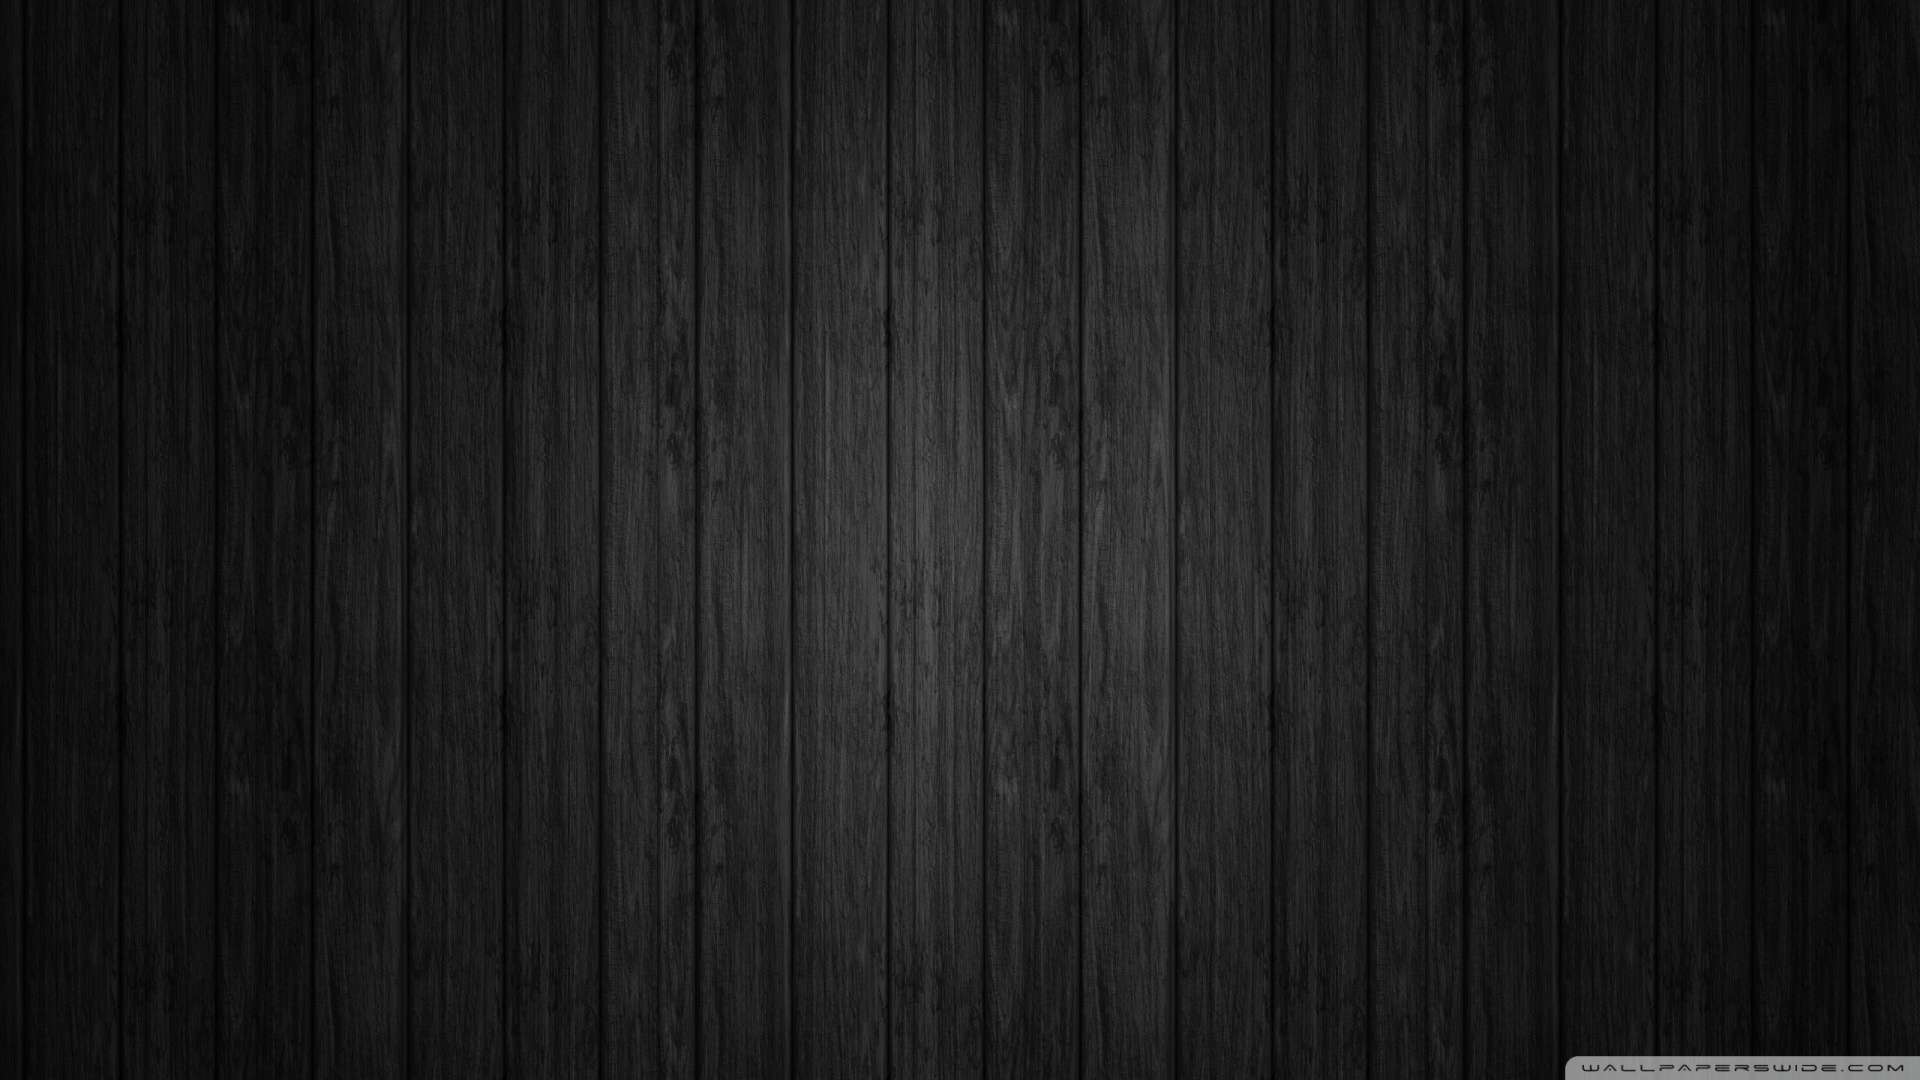 Wallpaper Black Background Wood 1080p HD Upload At